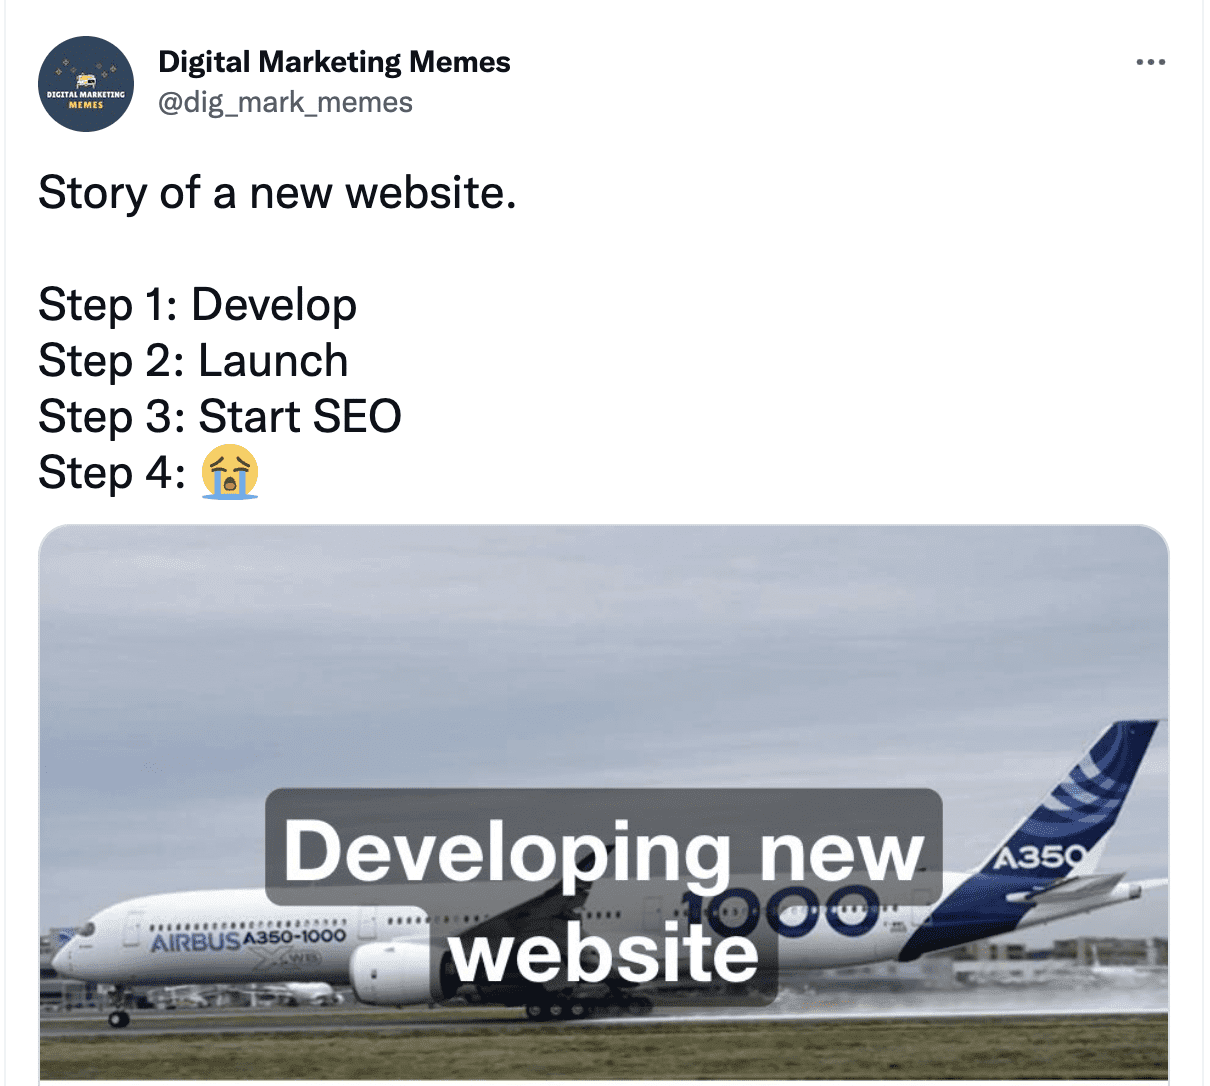 "Story of a new website" SEO meme